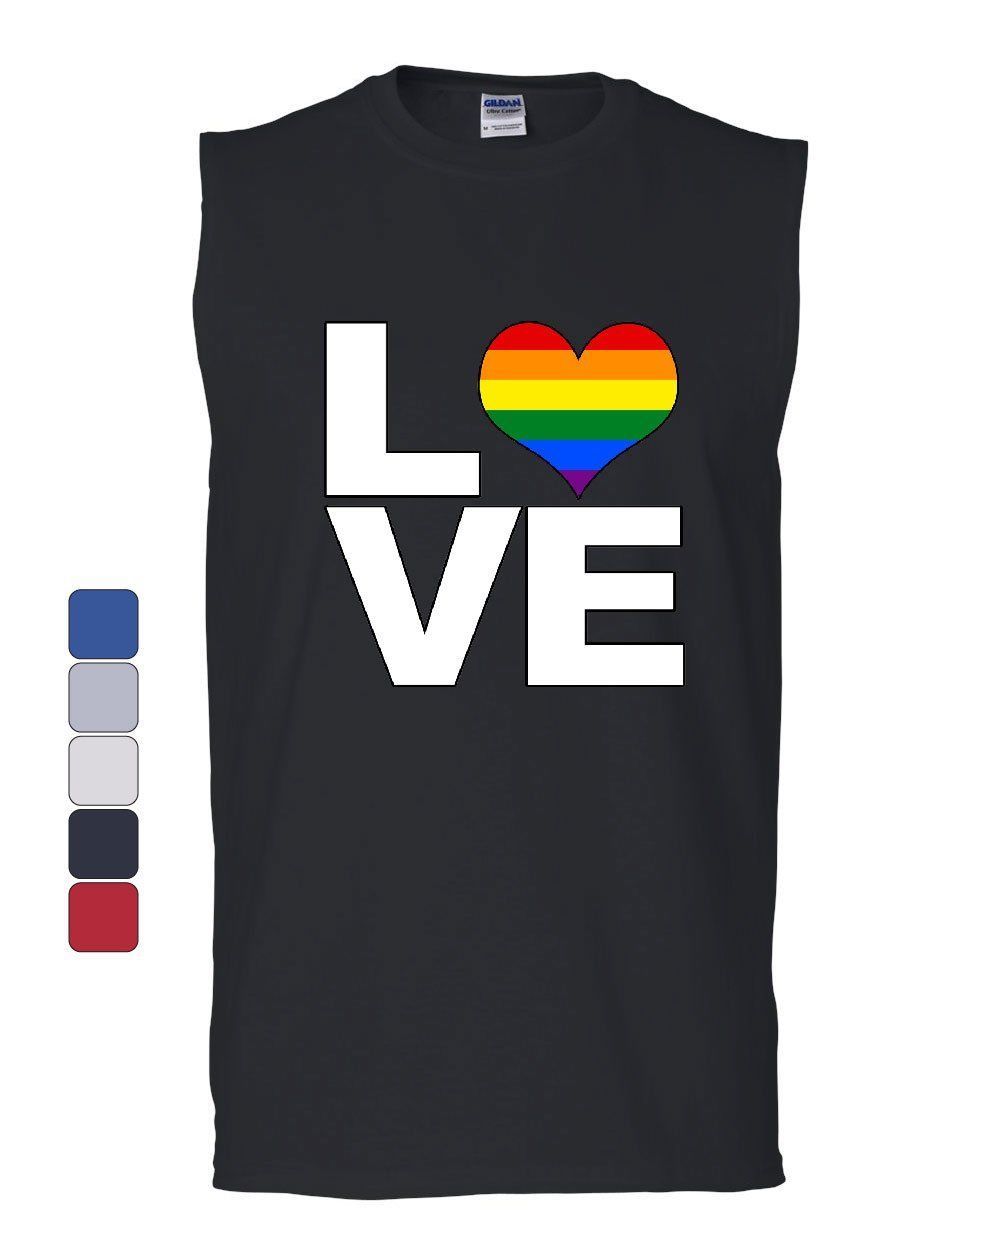 Make Love Gay Pride LGBTQ Rainbow Muscle Shirt Equal